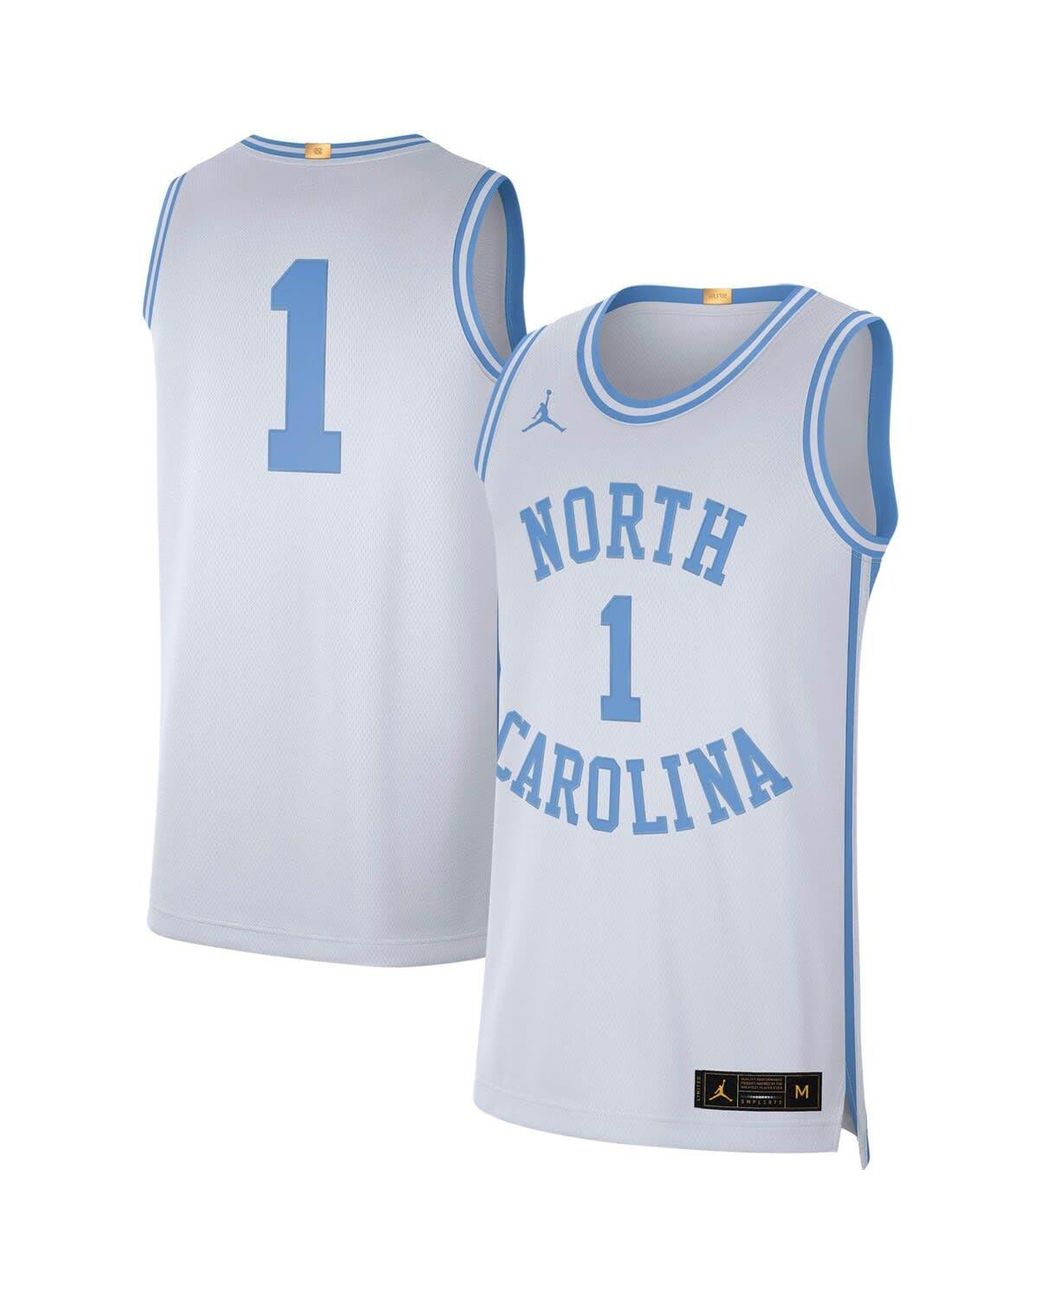 North Carolina A&T Men's Nike College Full-Button Baseball Jersey.